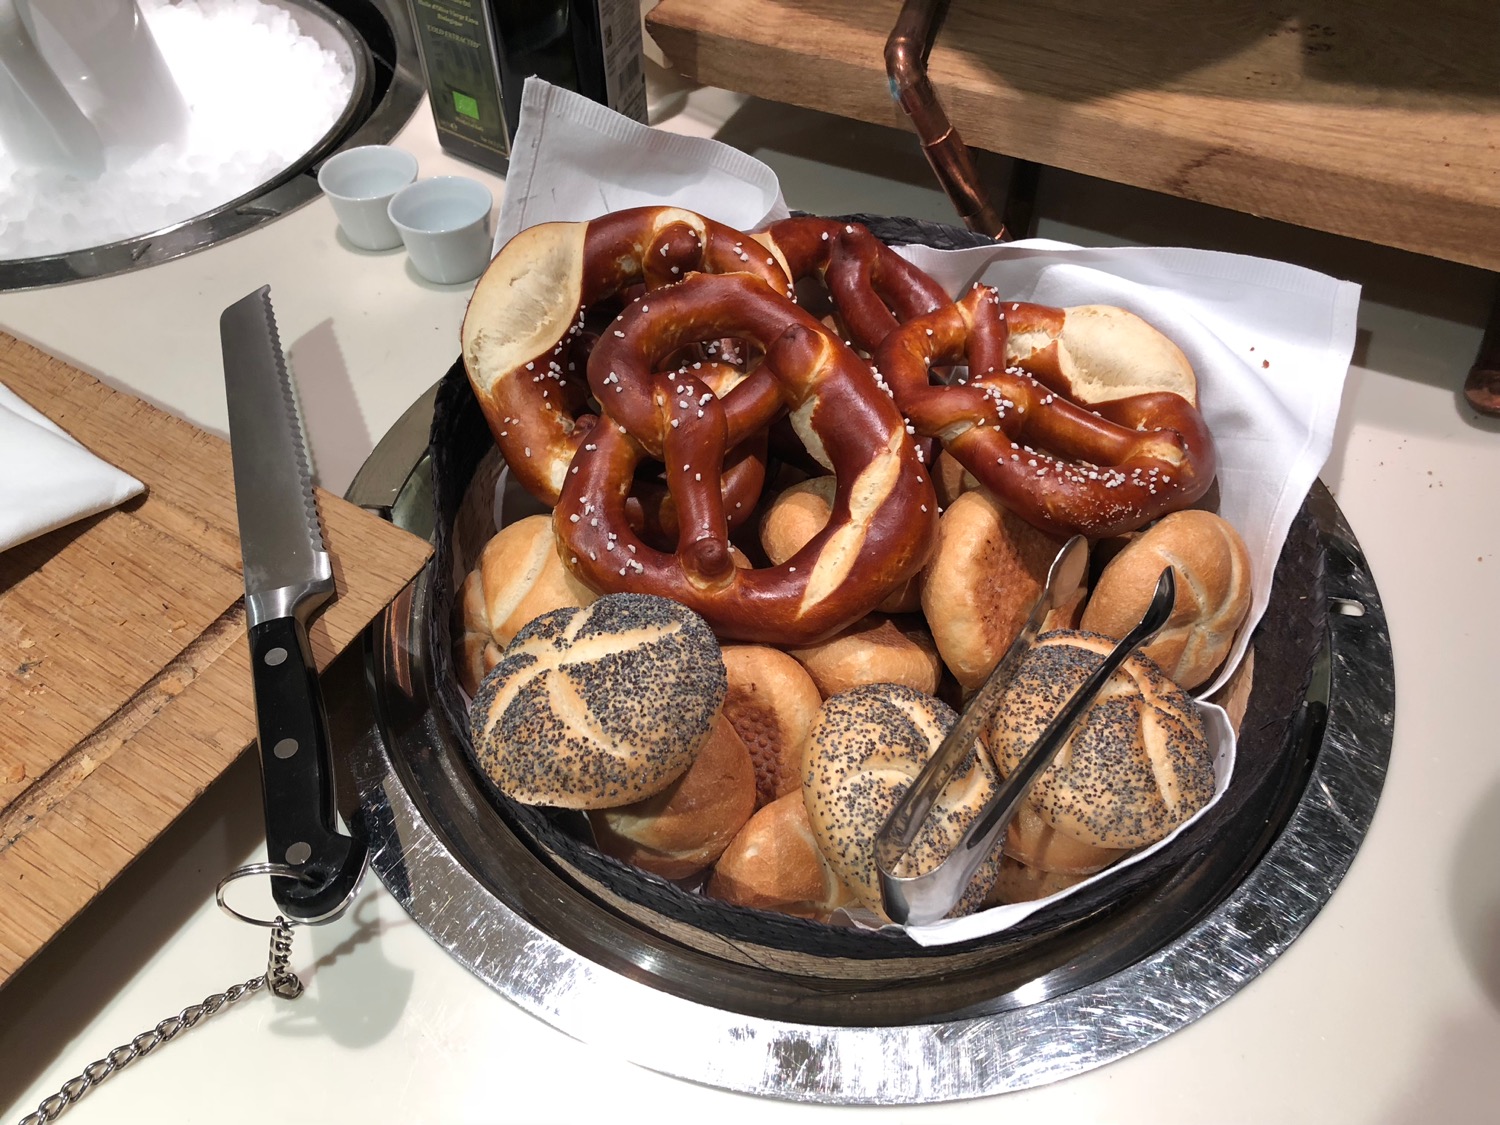 a basket of pretzels and rolls